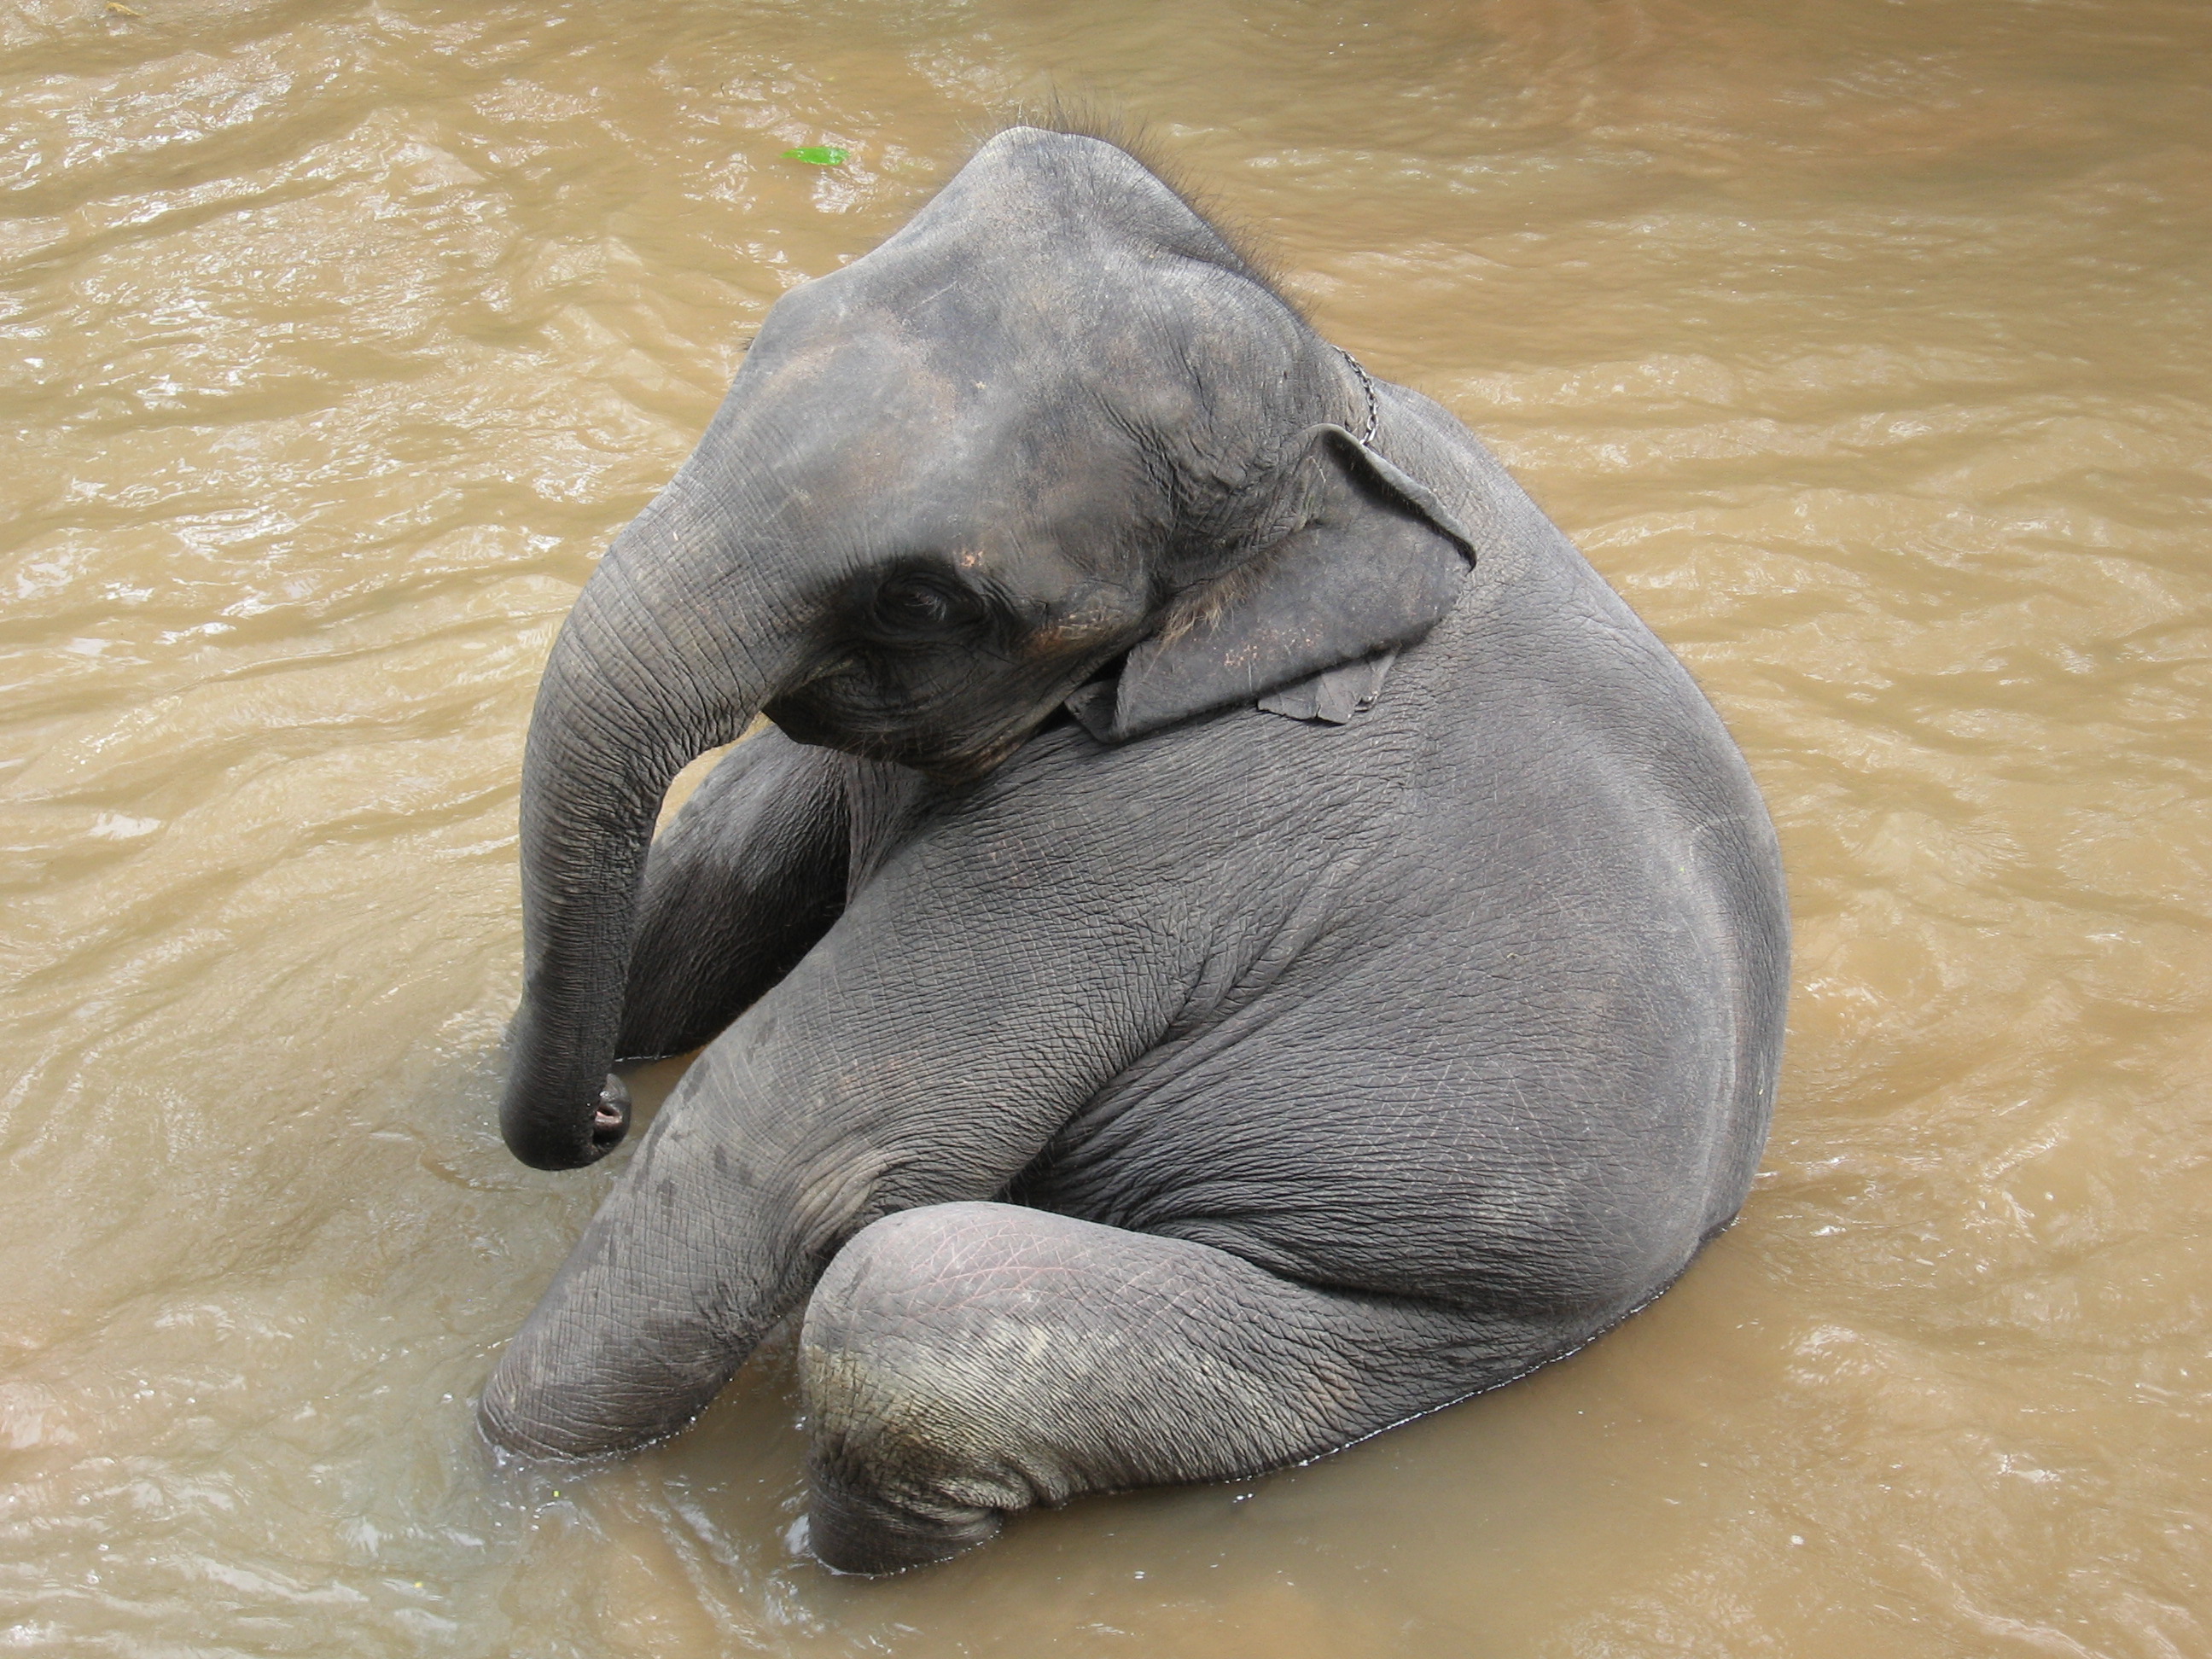 Goofy Baby Elephant Sitting In Water